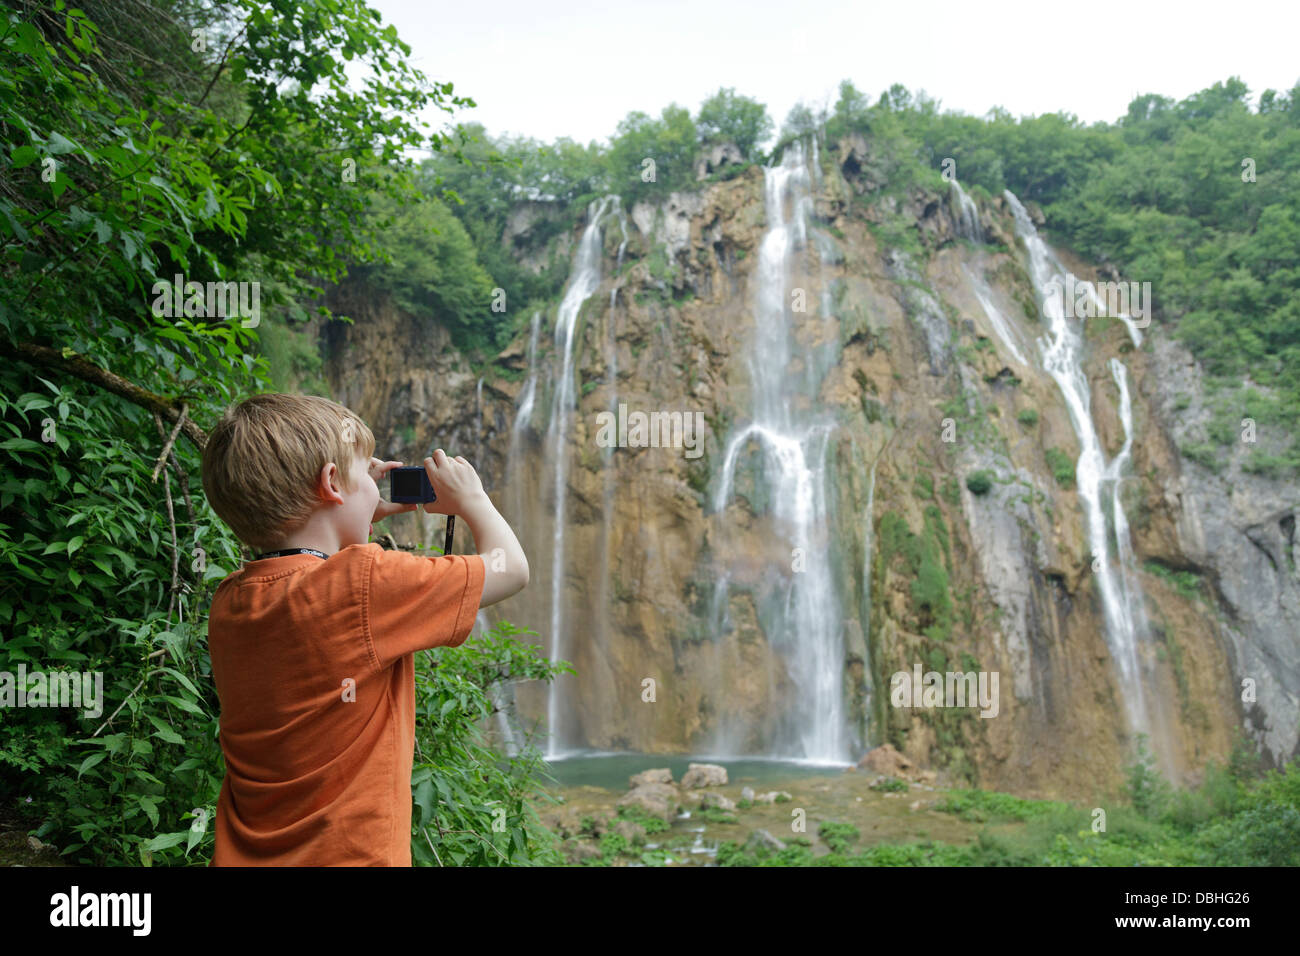 young boy, Plitwitz Lakes, North Dalmatia, Croatia Stock Photo